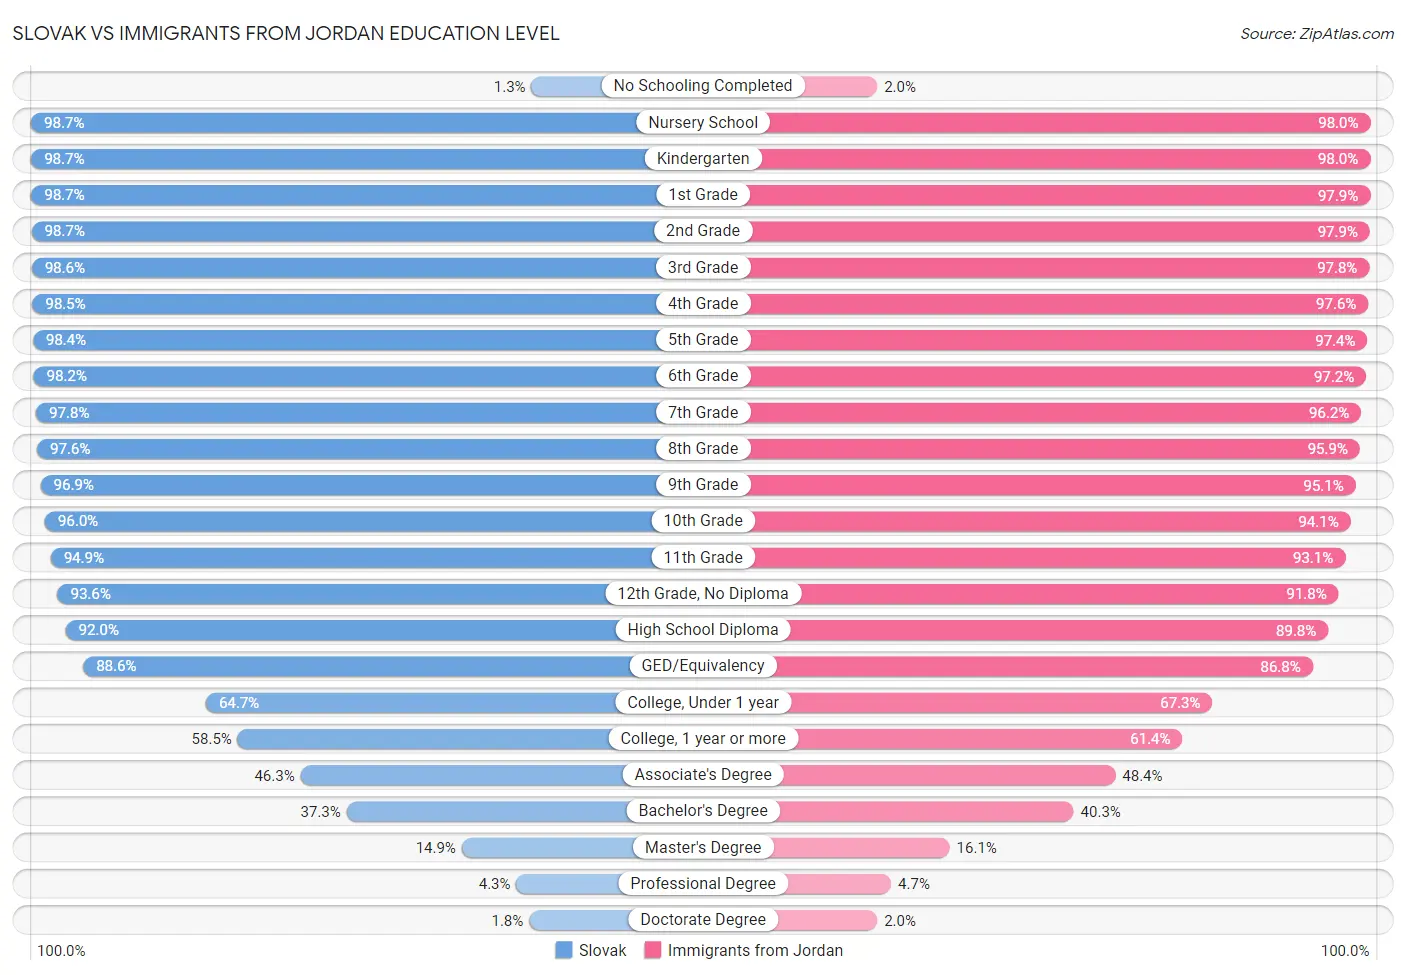 Slovak vs Immigrants from Jordan Education Level